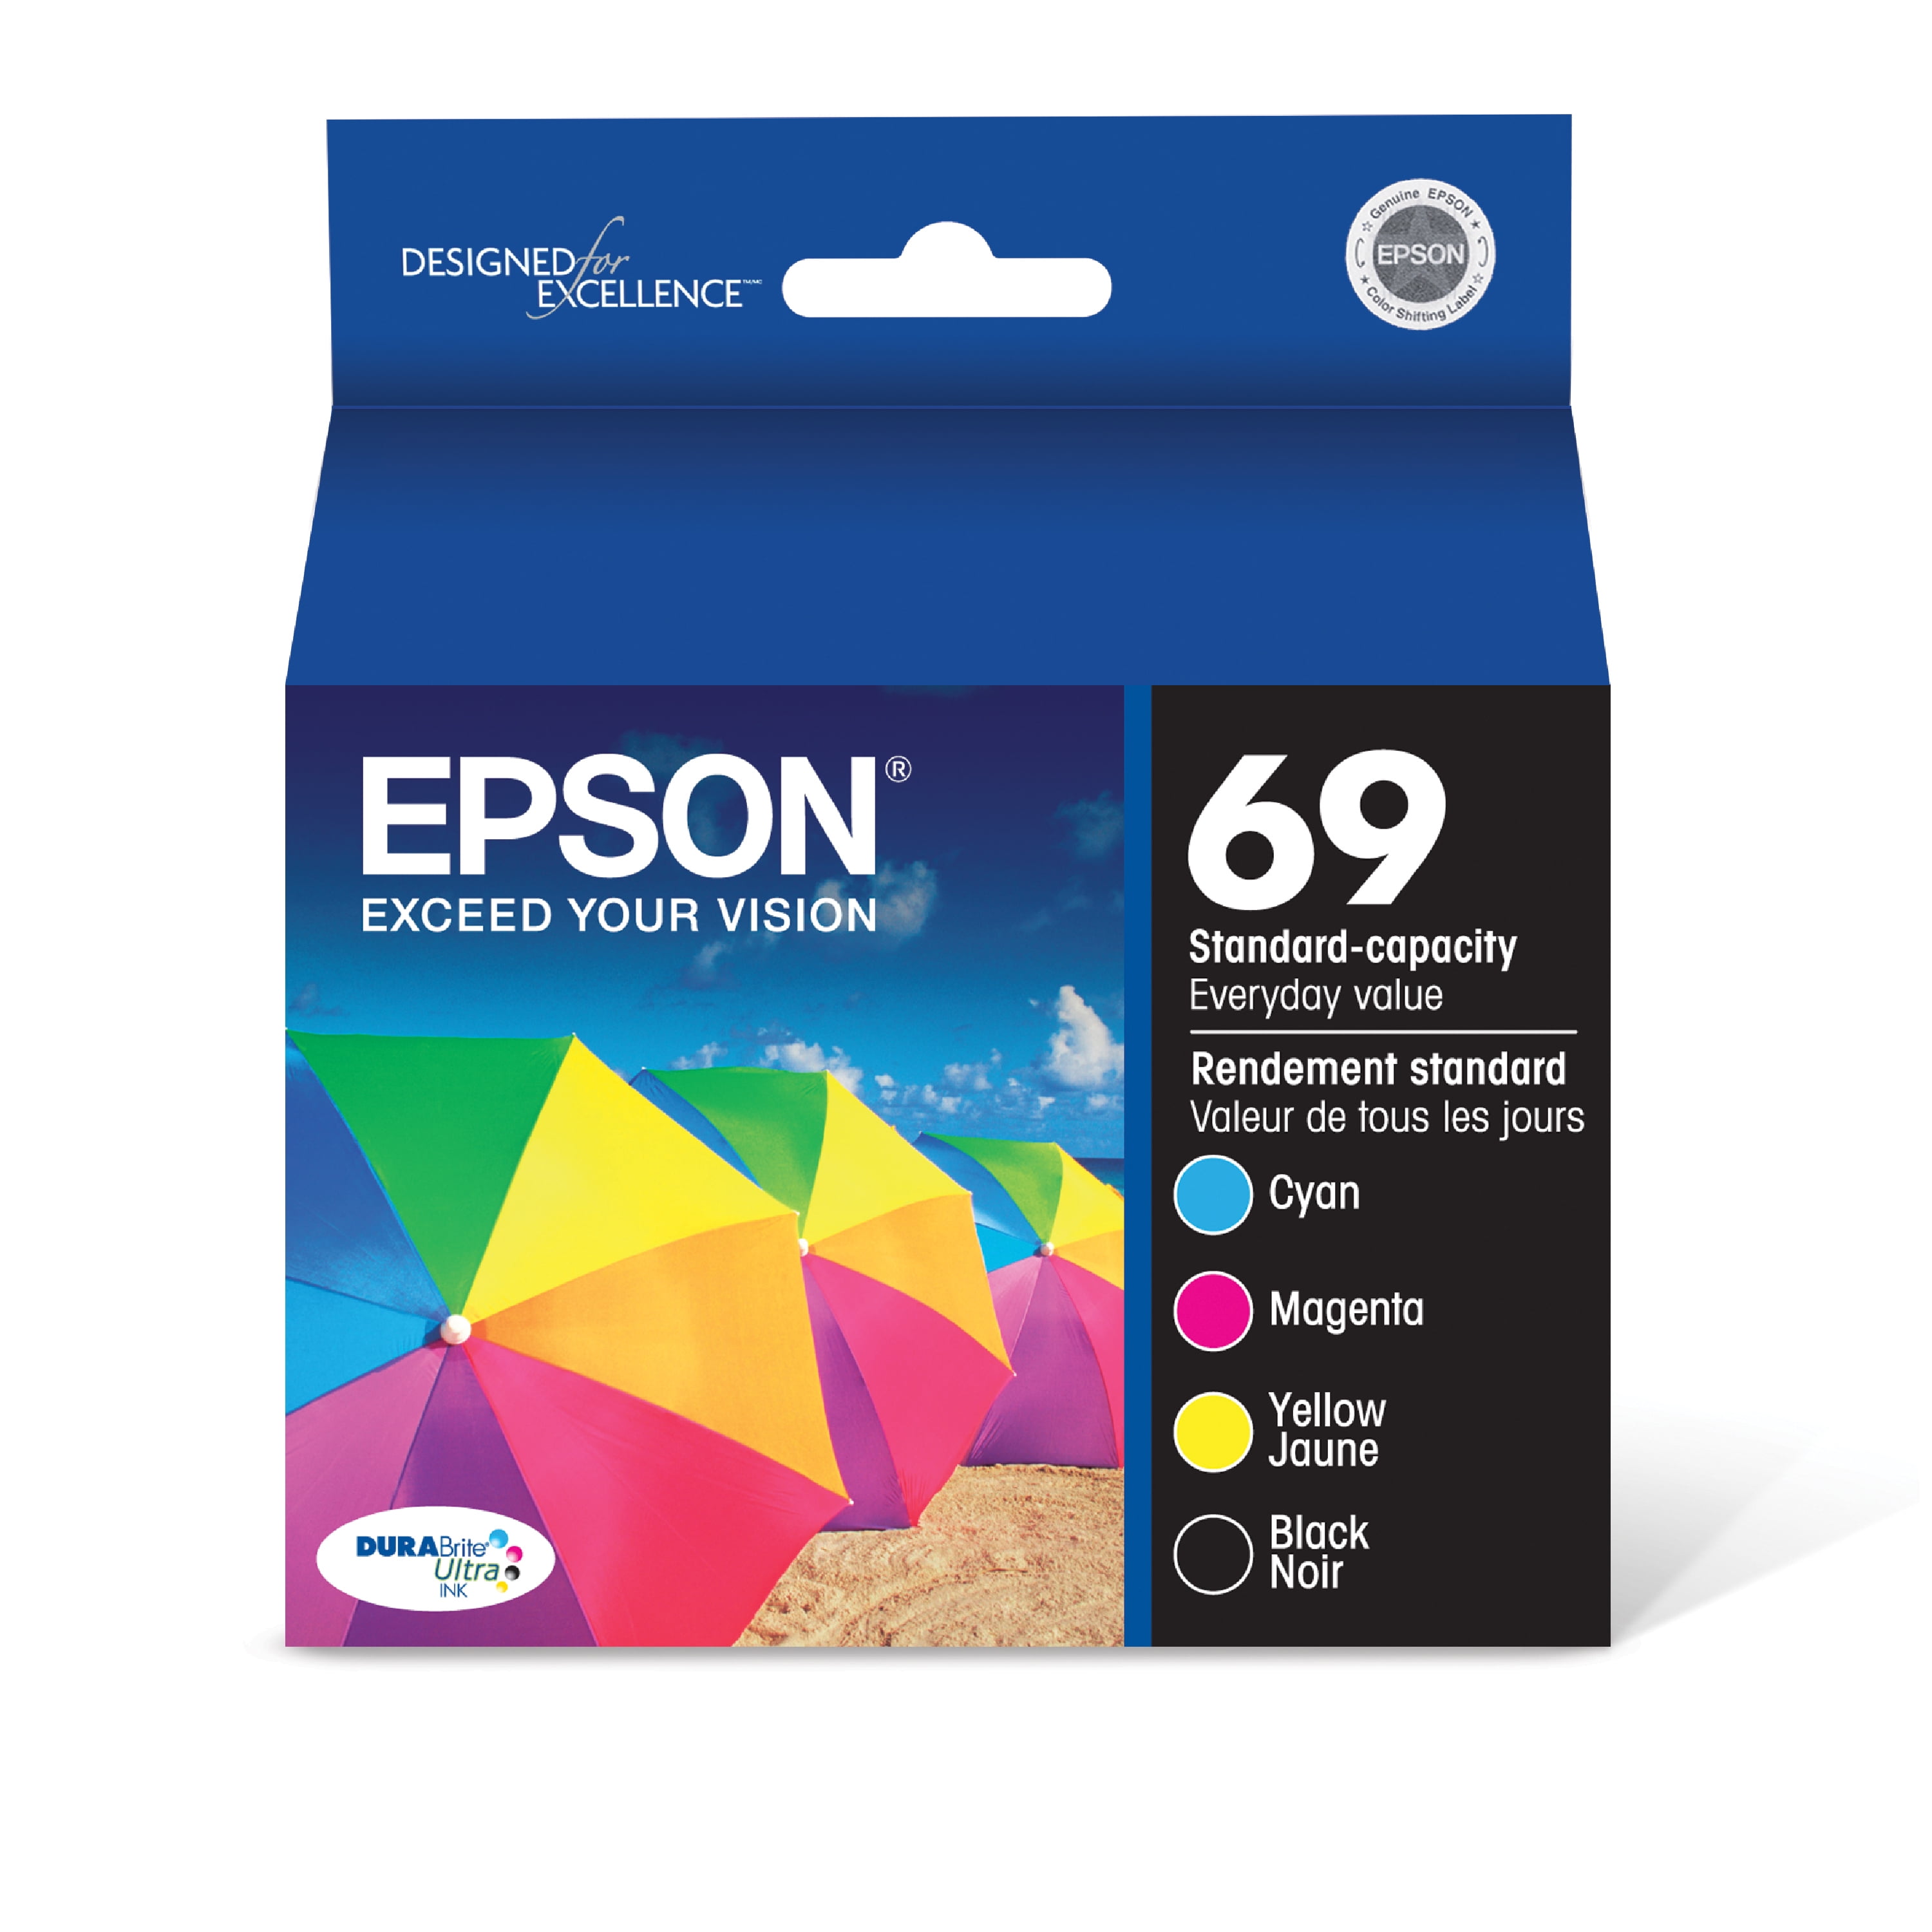 EPSON T069 DURABrite Ultra Genuine Ink Standard Capacity Black & Color Combo Pack